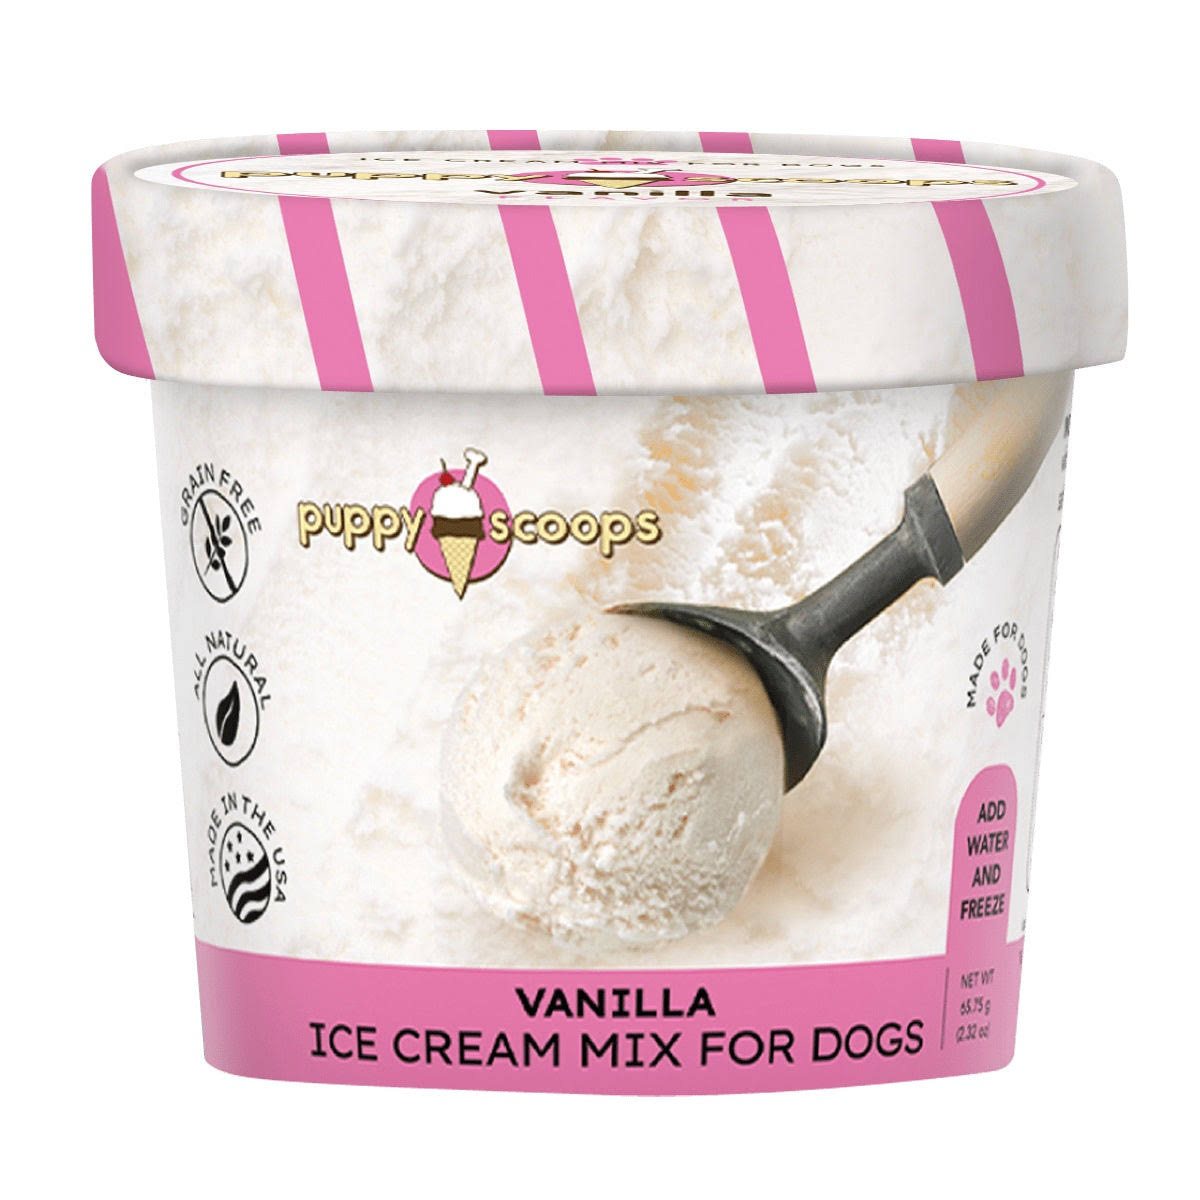 Puppy Scoops Ice Cream Mix for Dogs 2.32 oz / Vanilla